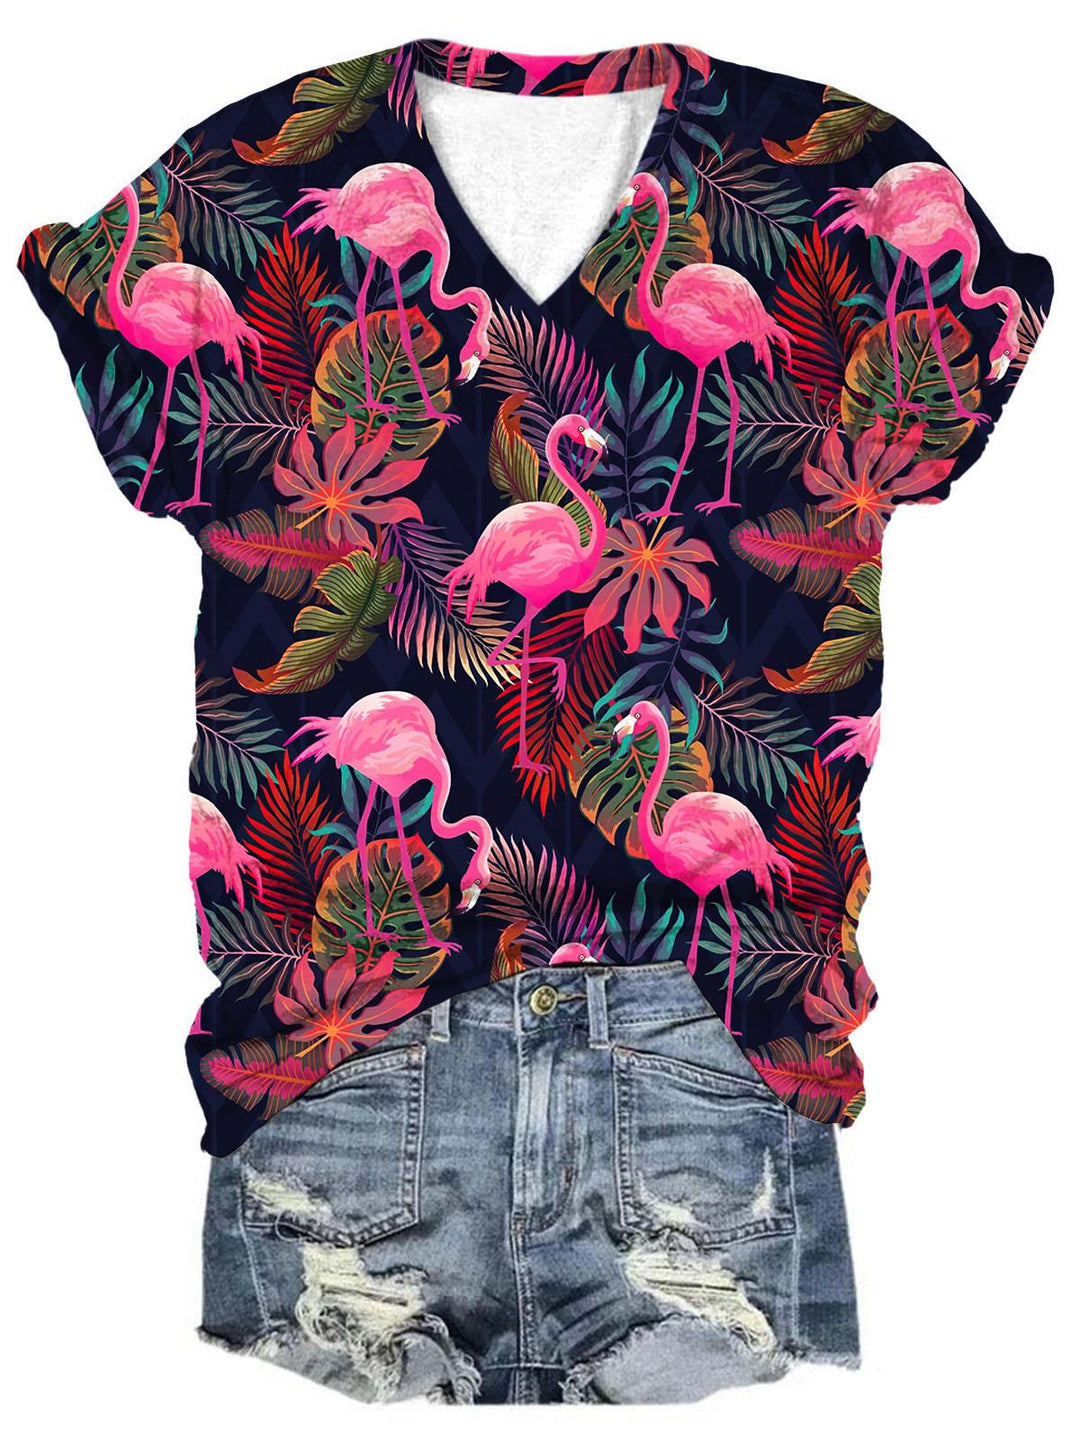 Women's Flamingo Print V-Neck Top